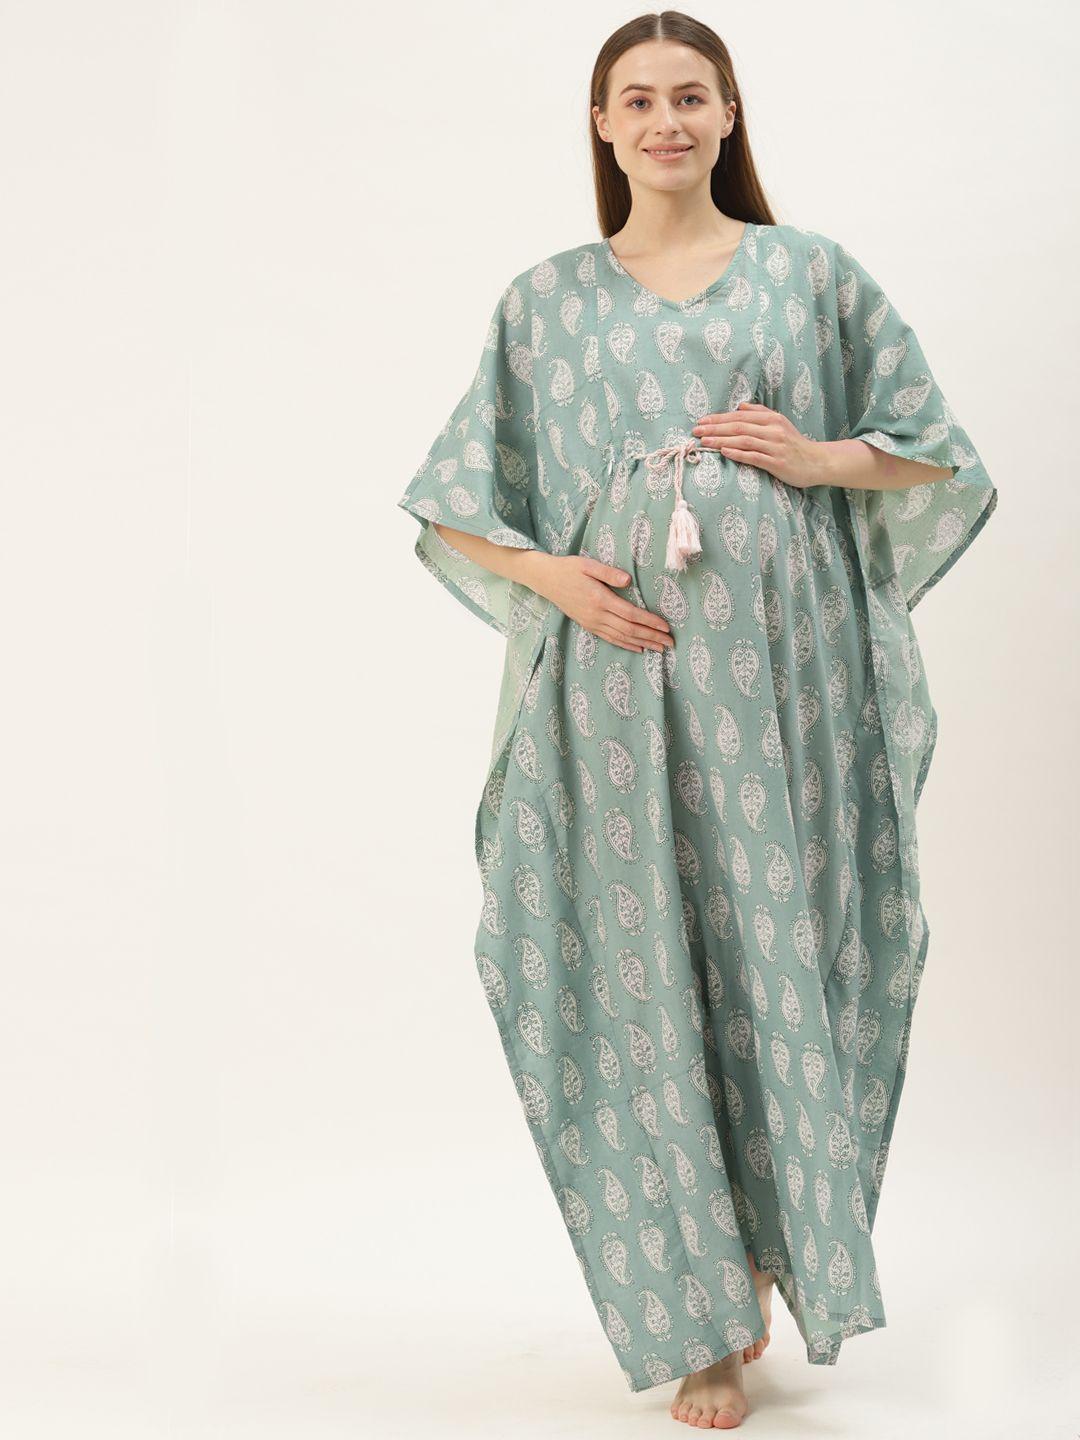 ikk kudi by seerat green printed pure cotton maternity & nursing kaftan maxi nightdress